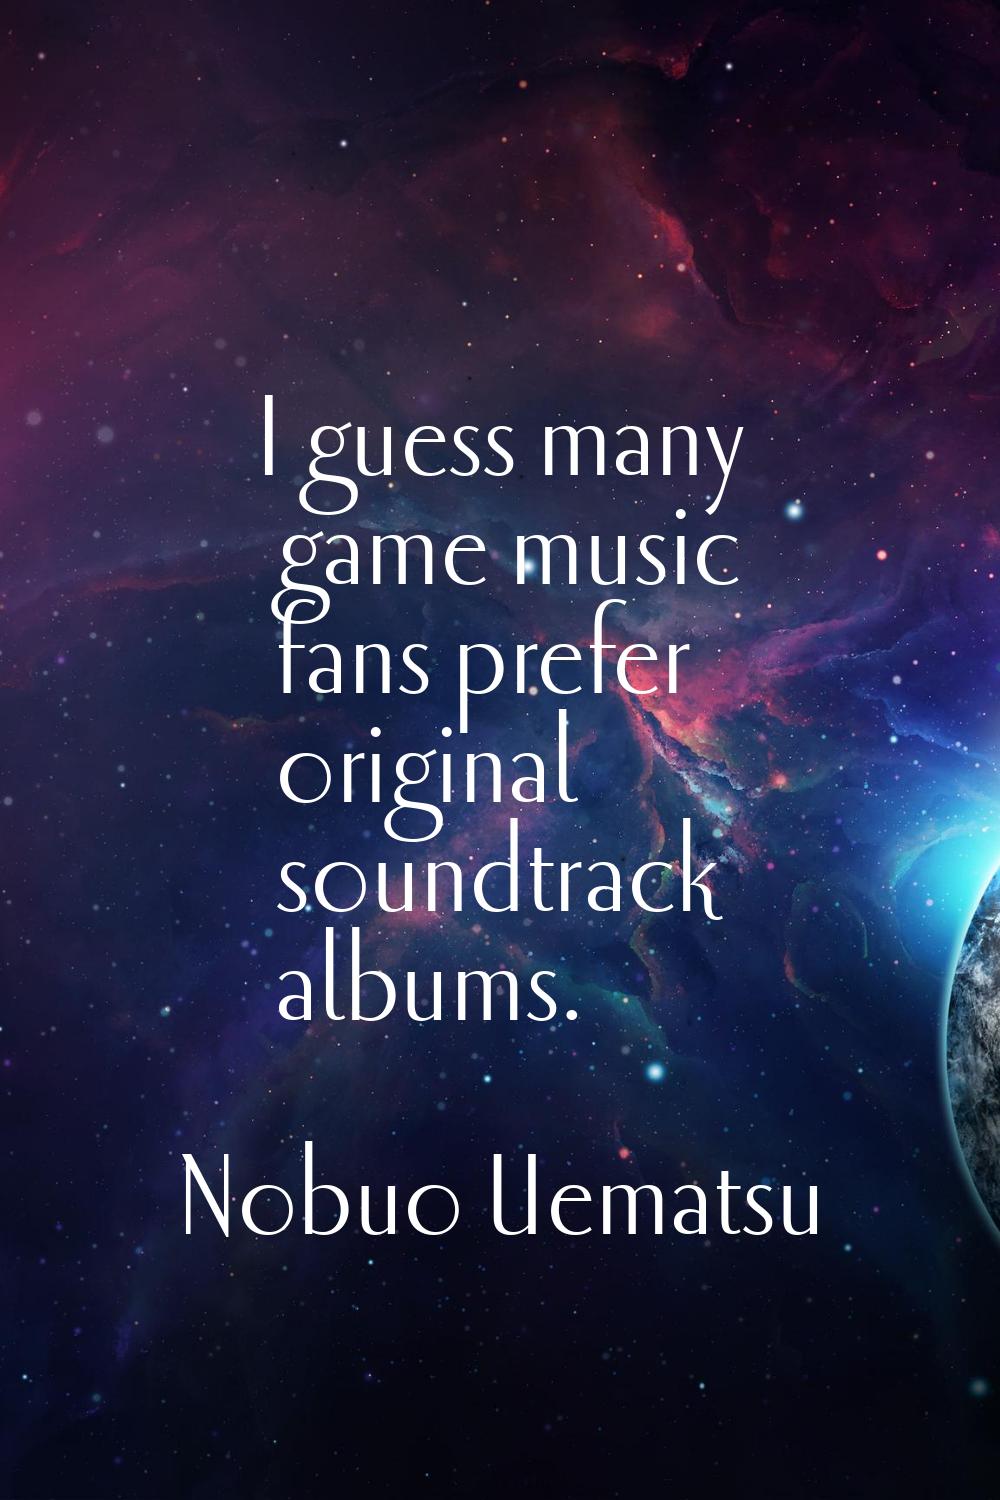 I guess many game music fans prefer original soundtrack albums.